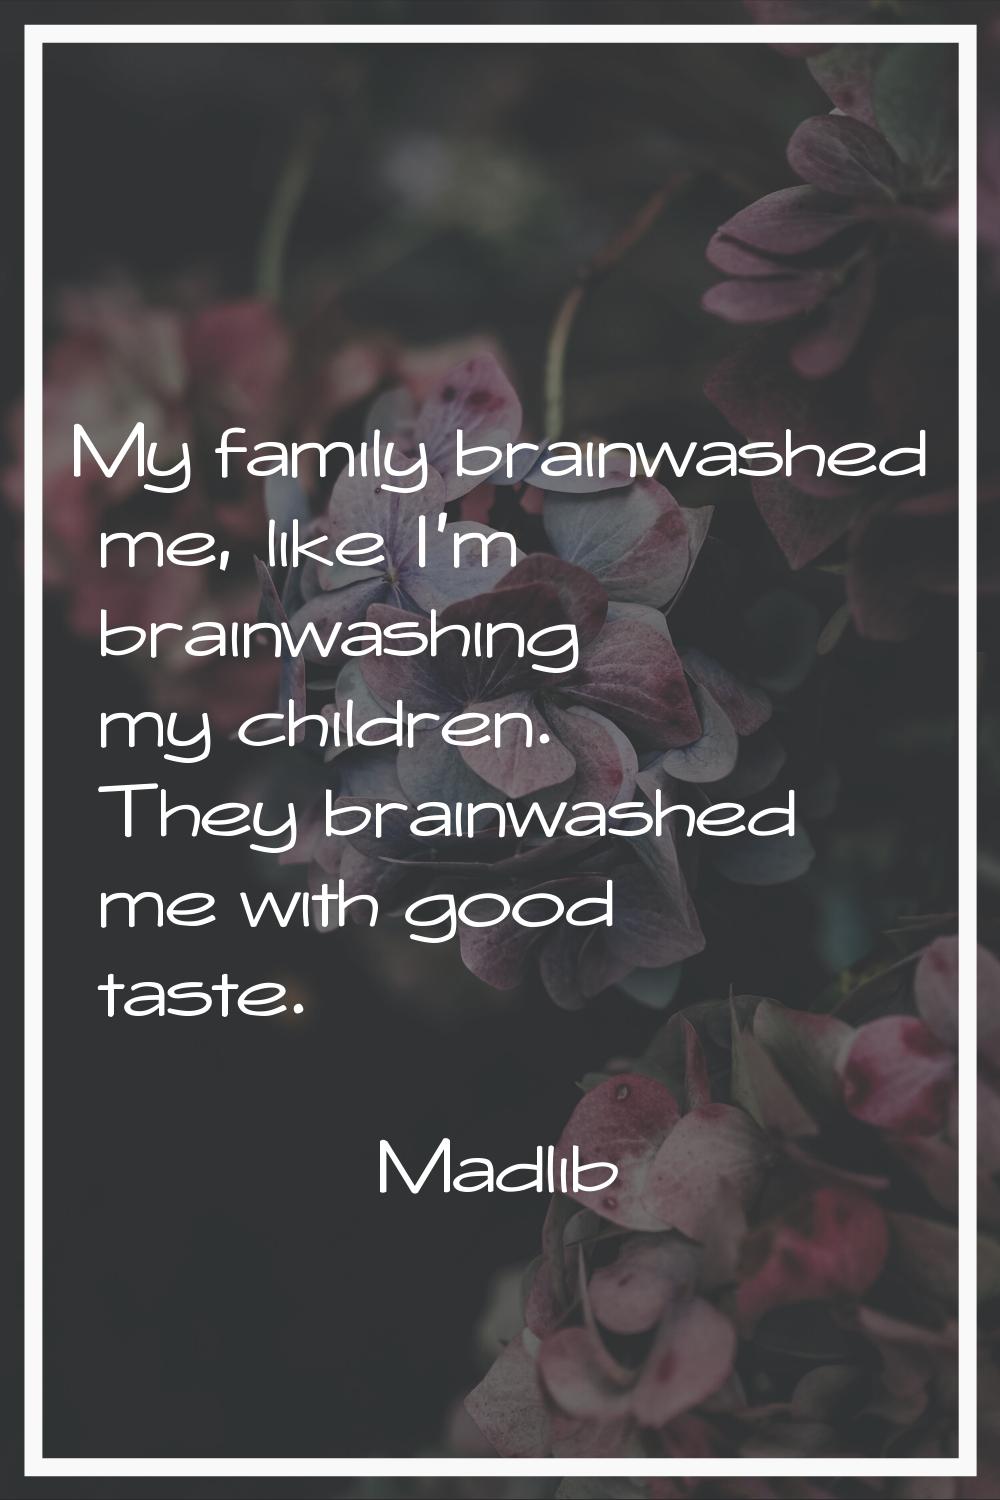 My family brainwashed me, like I'm brainwashing my children. They brainwashed me with good taste.